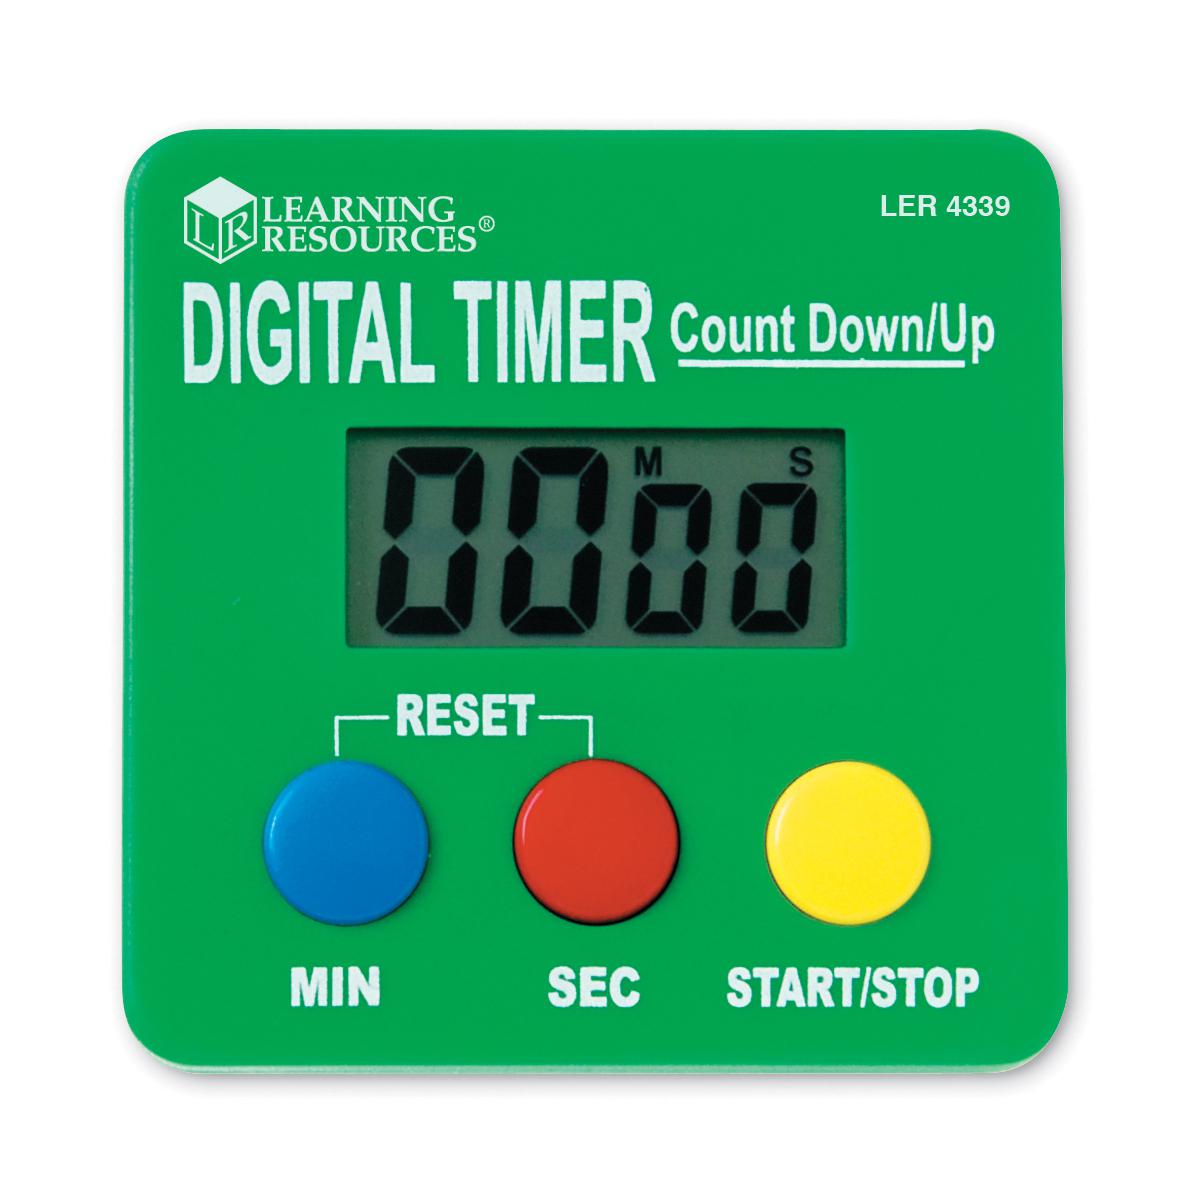  Digital Timer Count Down/Up